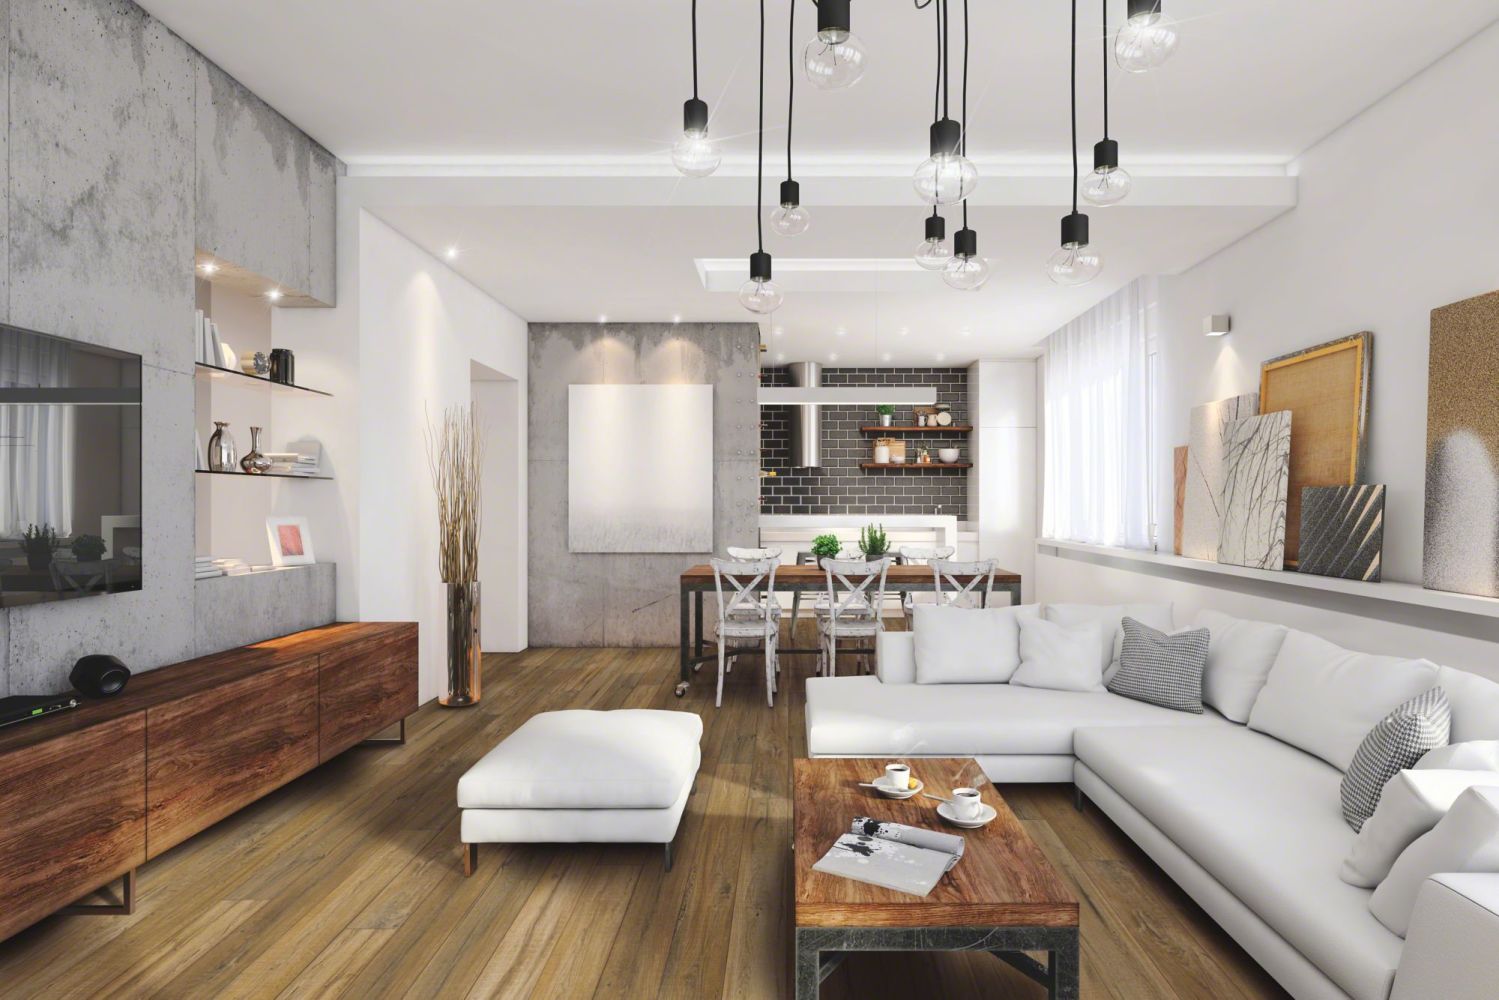 Shaw Floors Resilient Residential COREtec Plus Premium 7″ Reserve Oak 02701_VV458